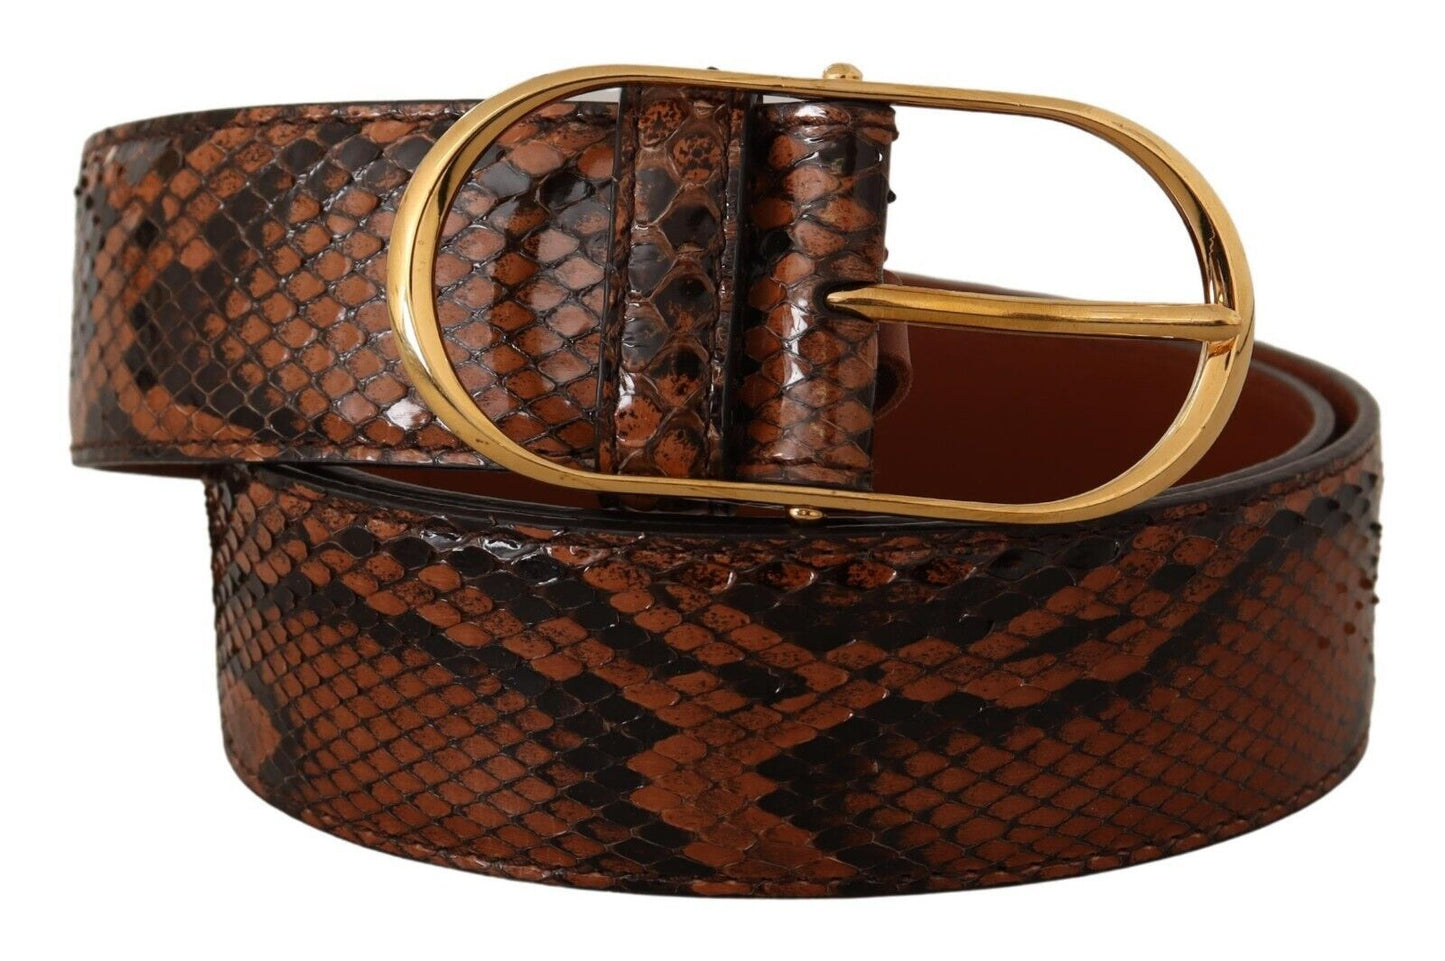 Dolce & Gabbana Elegant Leather Belt with Gold Buckle